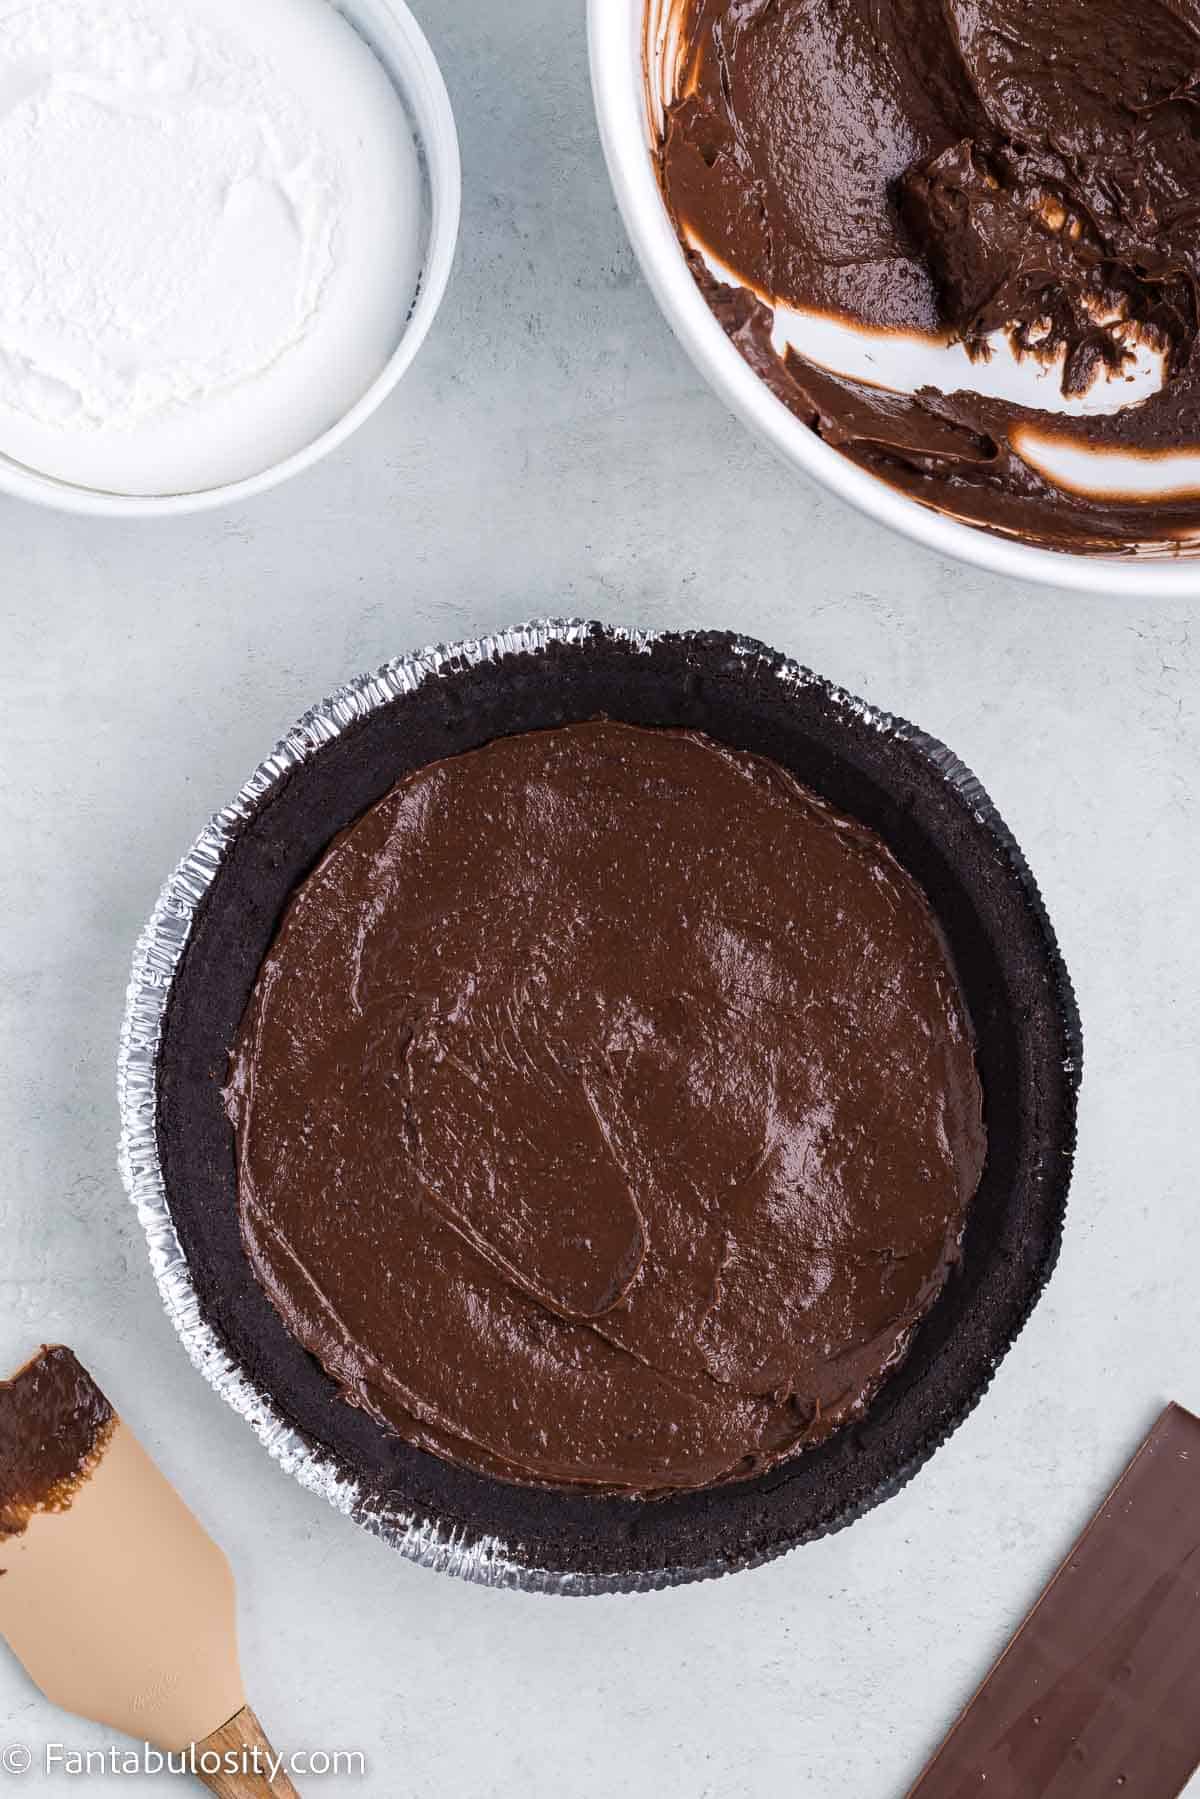 Chocolate pie filling inside of chocolate pie crust.